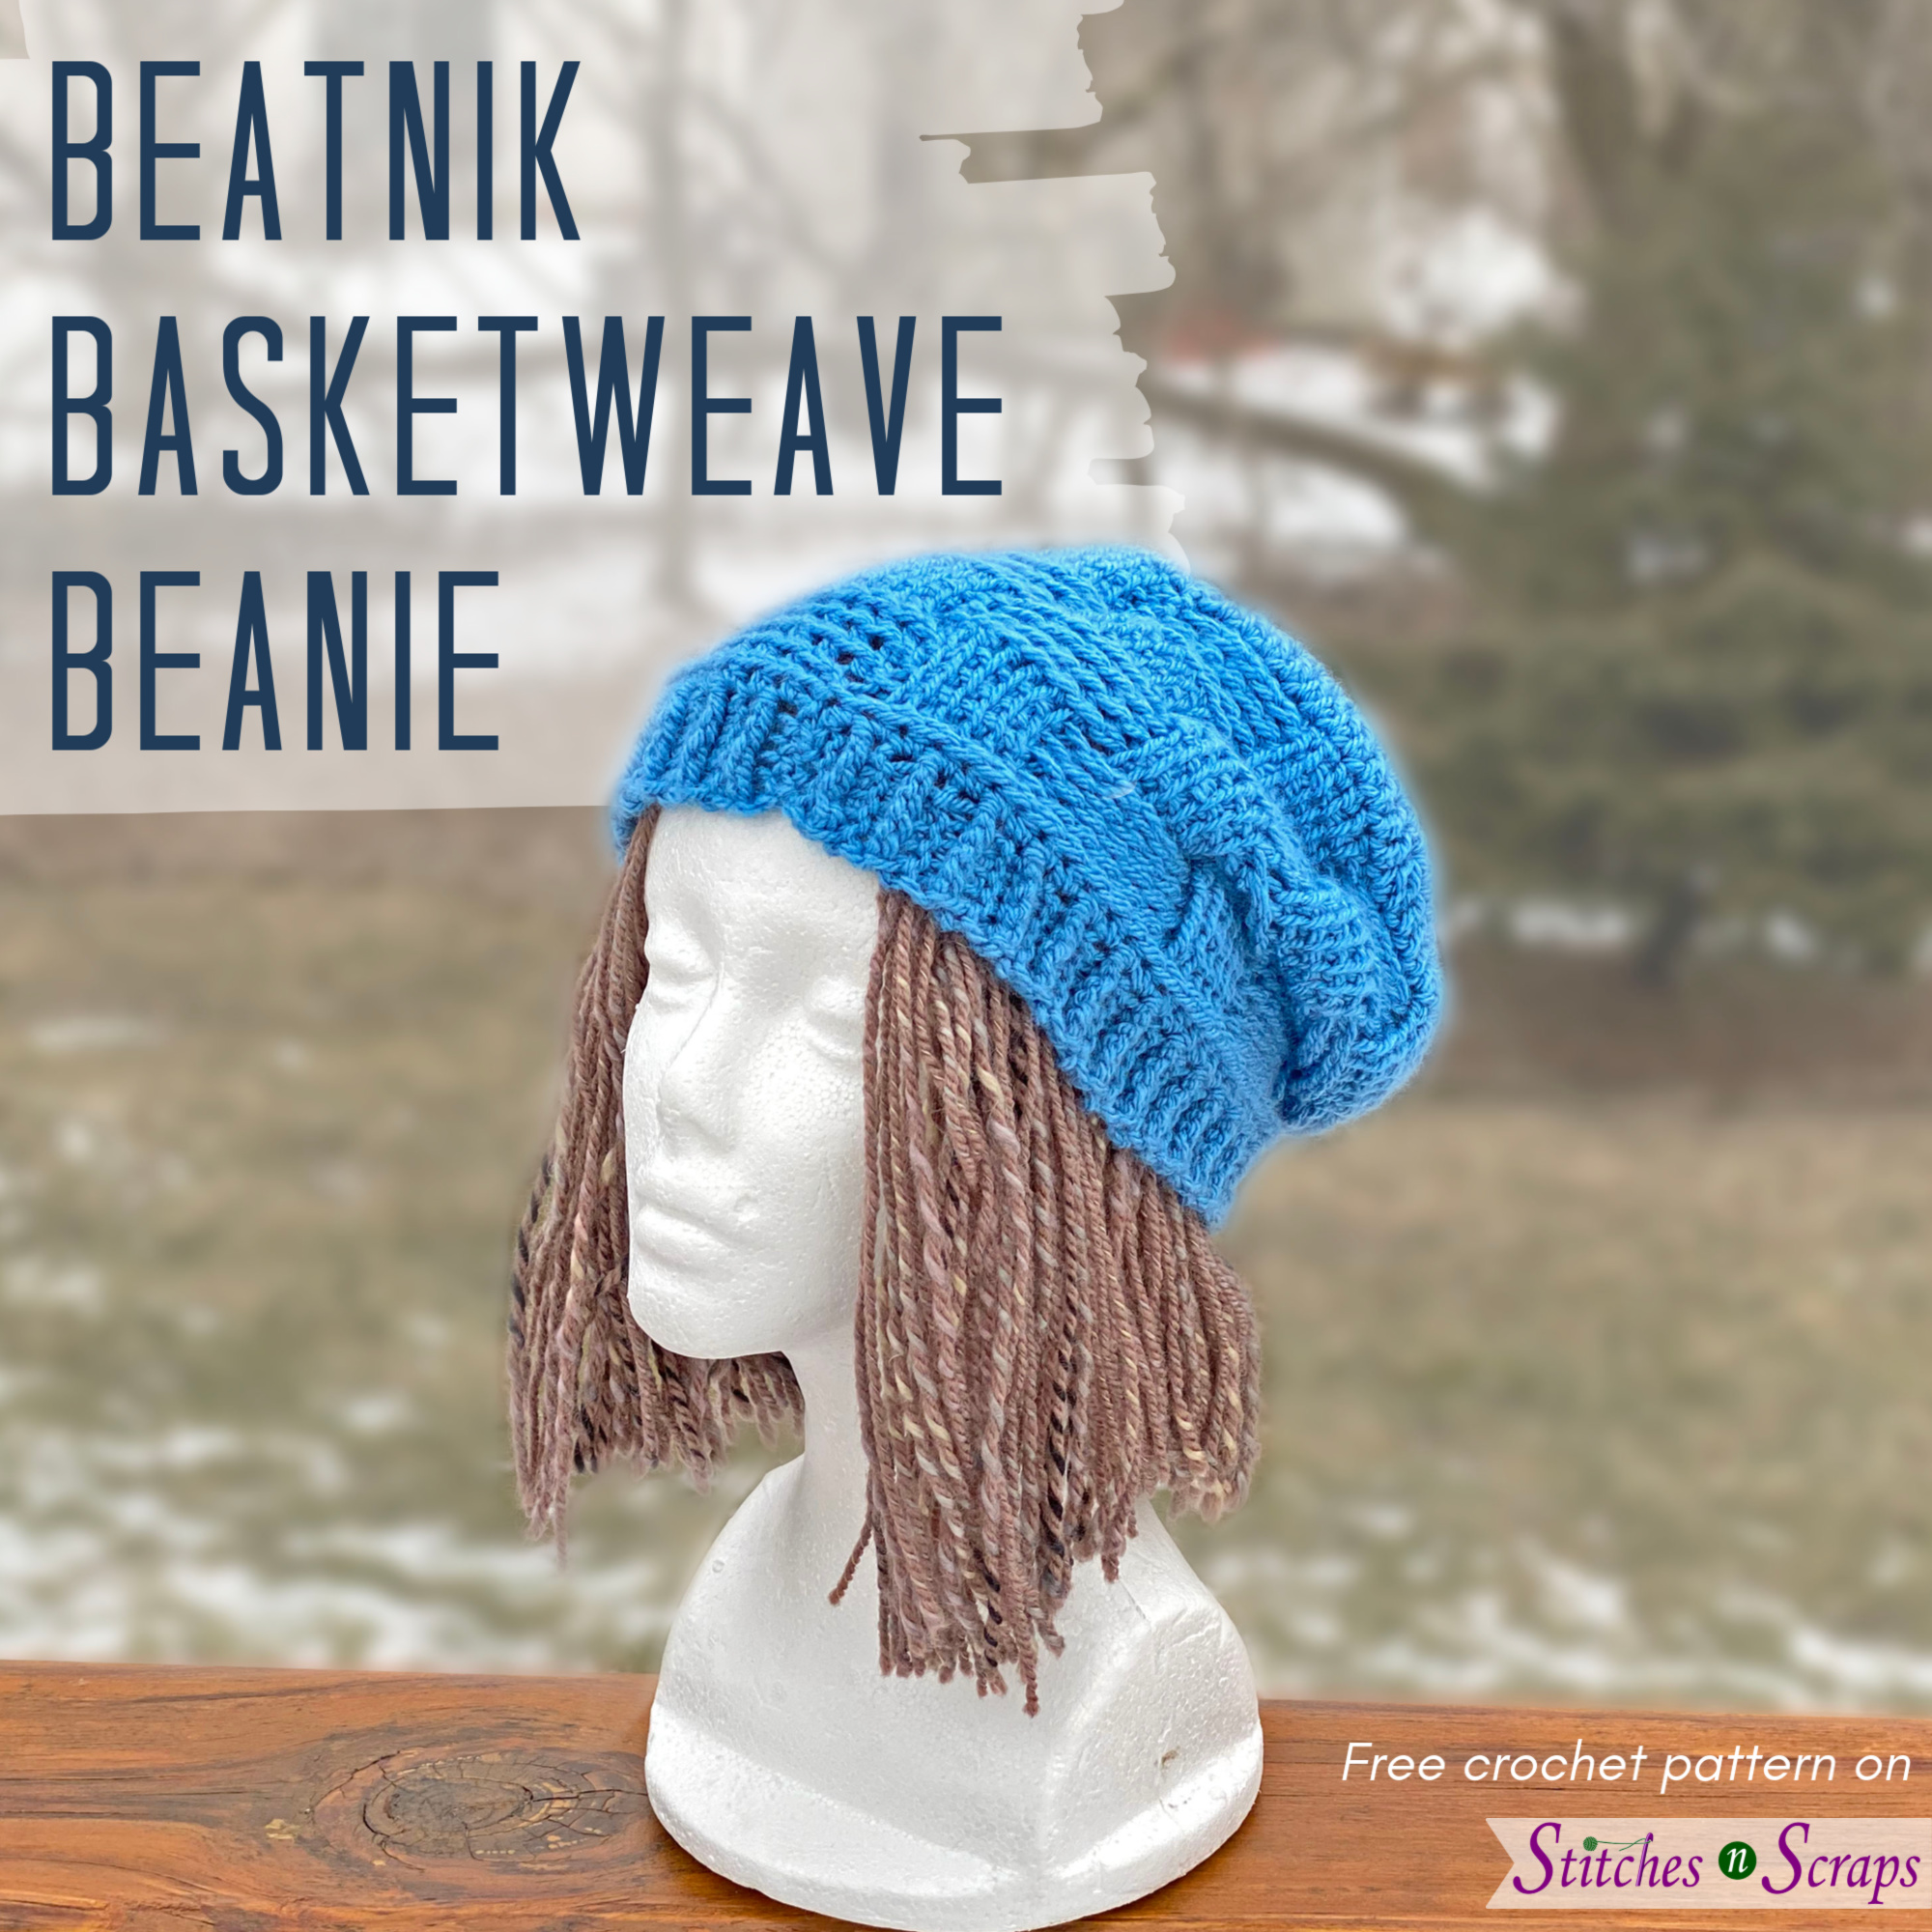 Beatnik Basketweave Beanie - free pattern on Stitches n Scraps